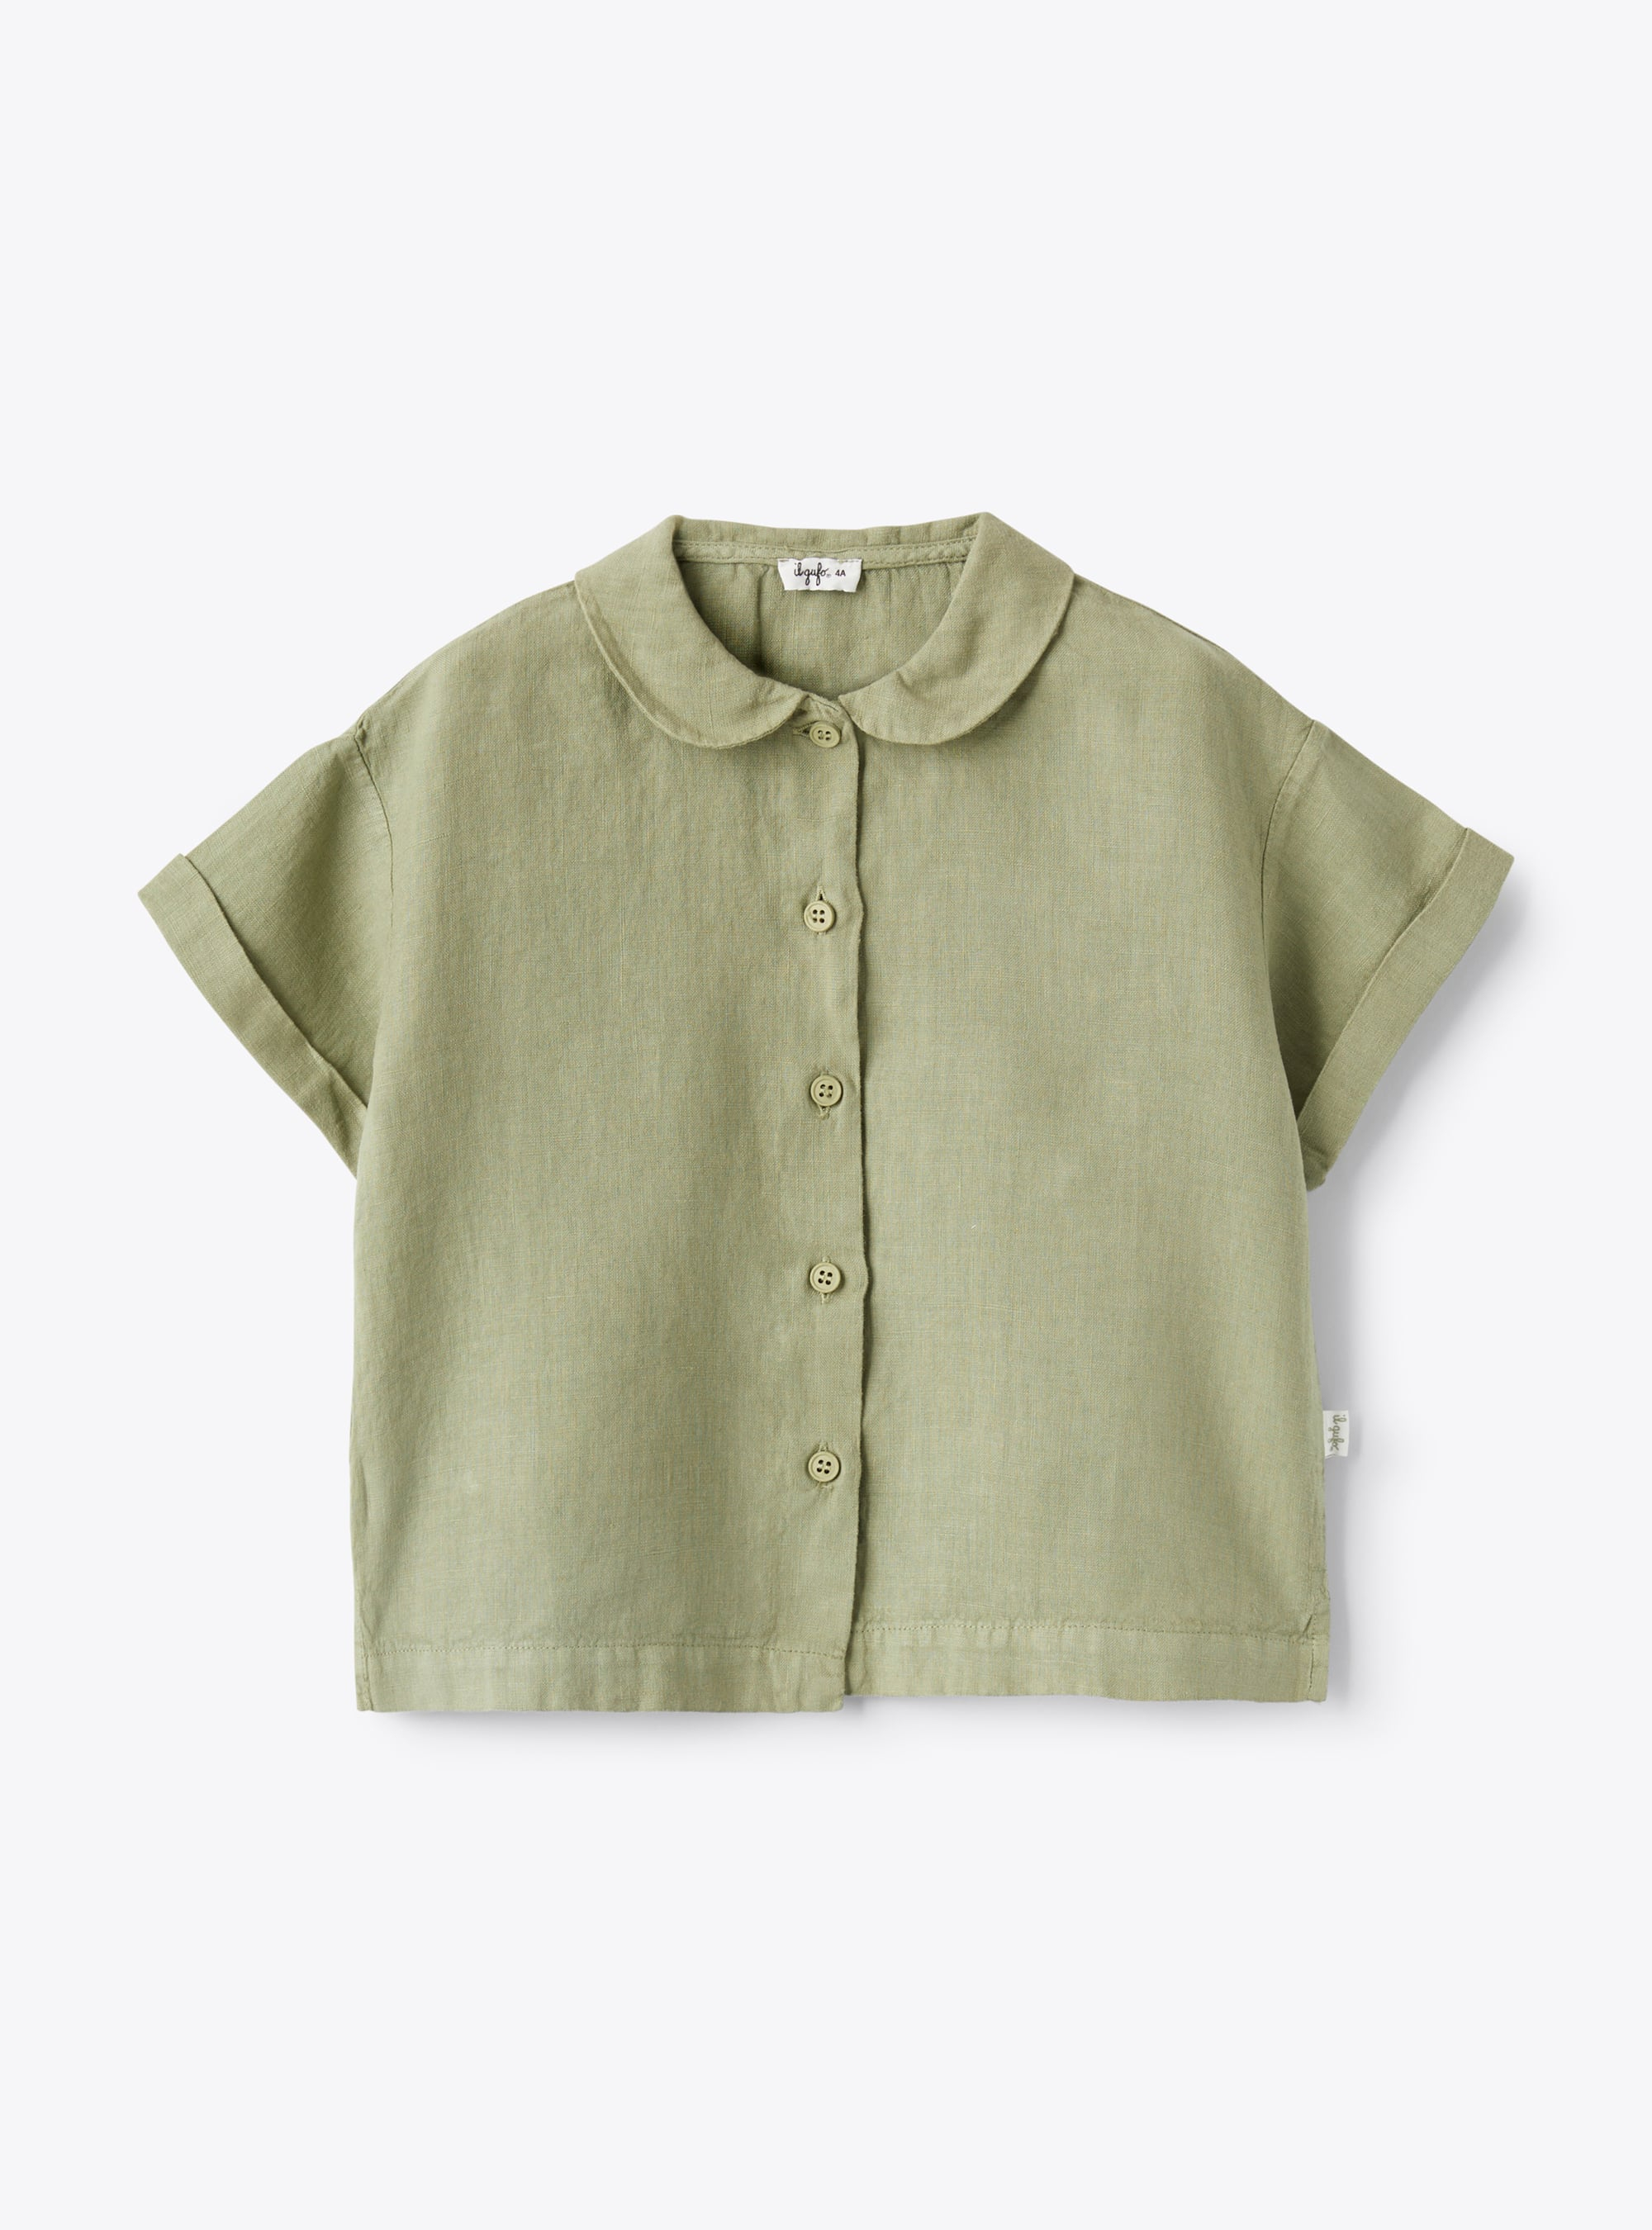 Shirt in sage-green garment-dyed linen - Shirts - Il Gufo